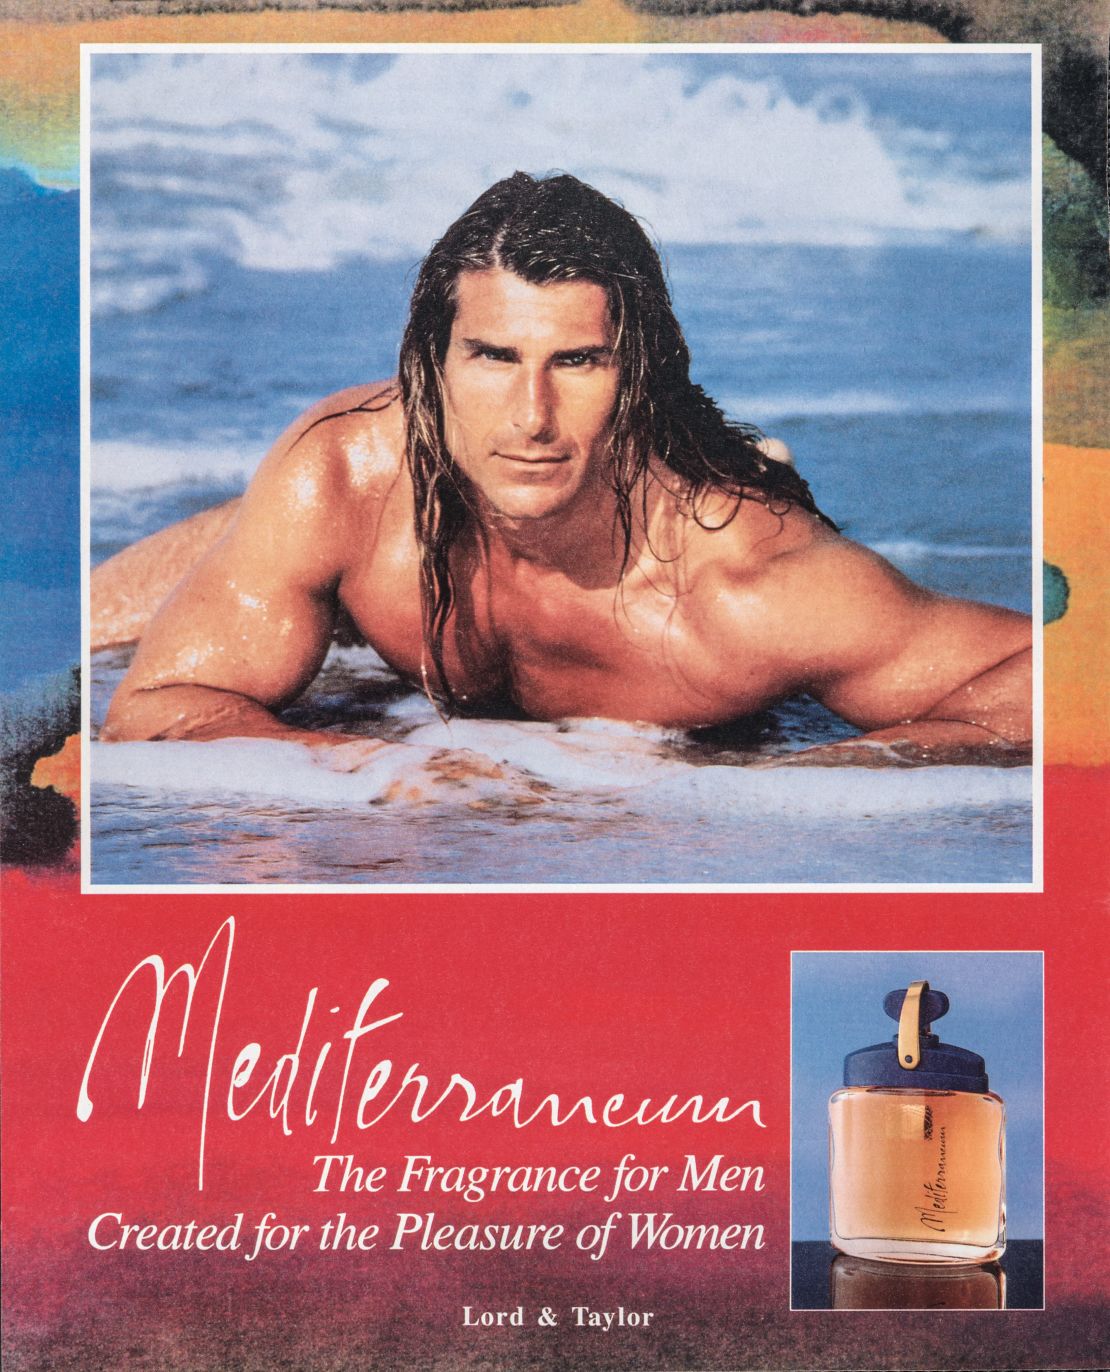 A perfume ad featuring 1990s icon Fabio.